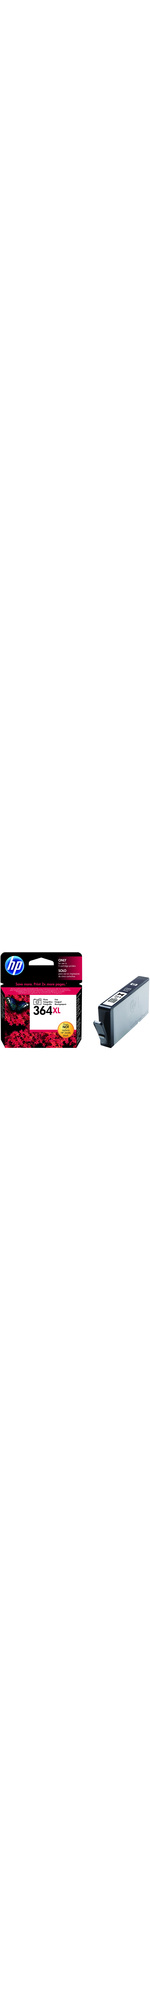 HP No. 364XL Photo Ink Cartridge - Black